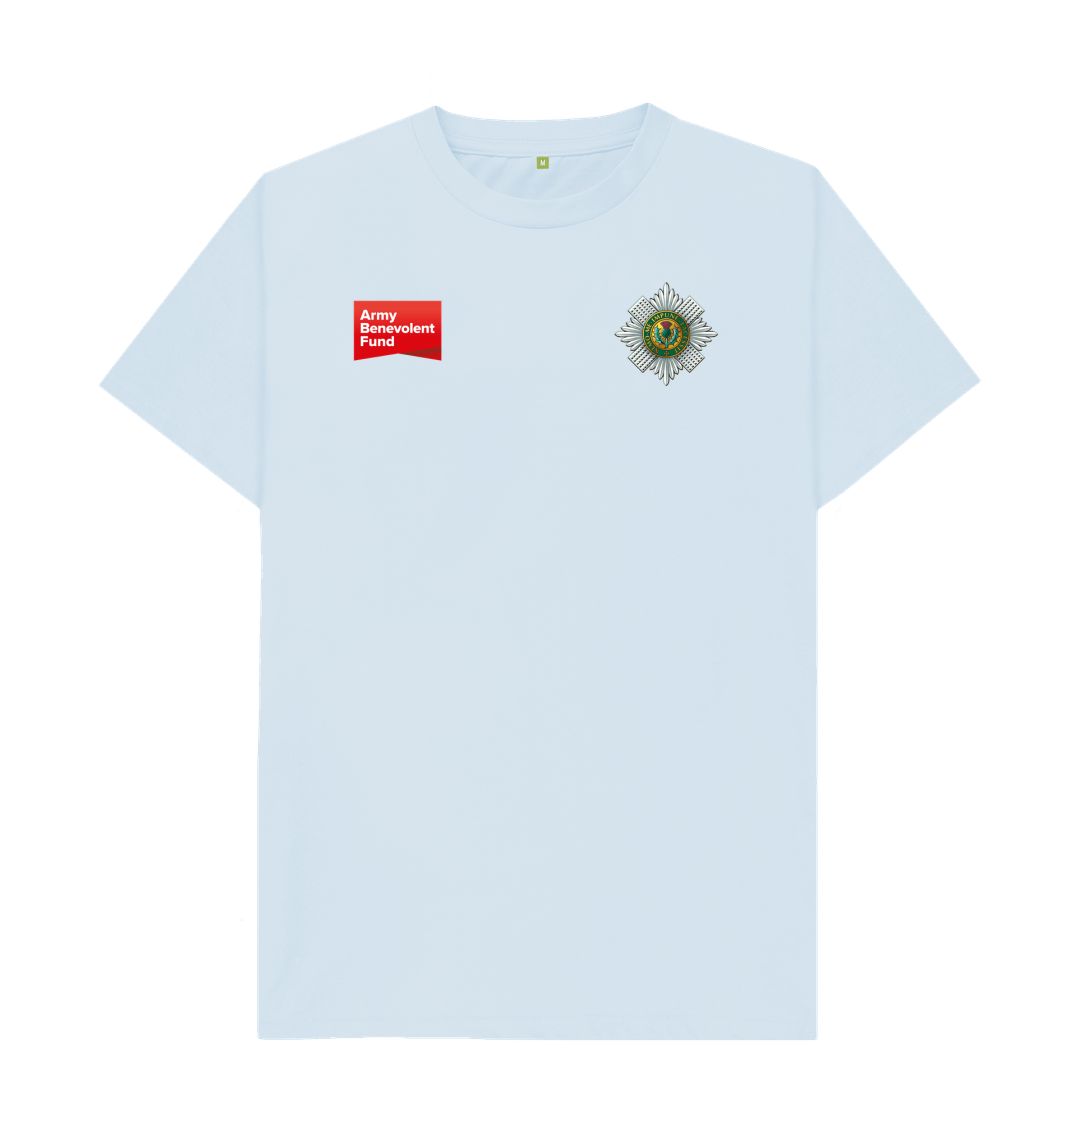 Scots Guards Unisex T-shirt - Army Benevolent Fund